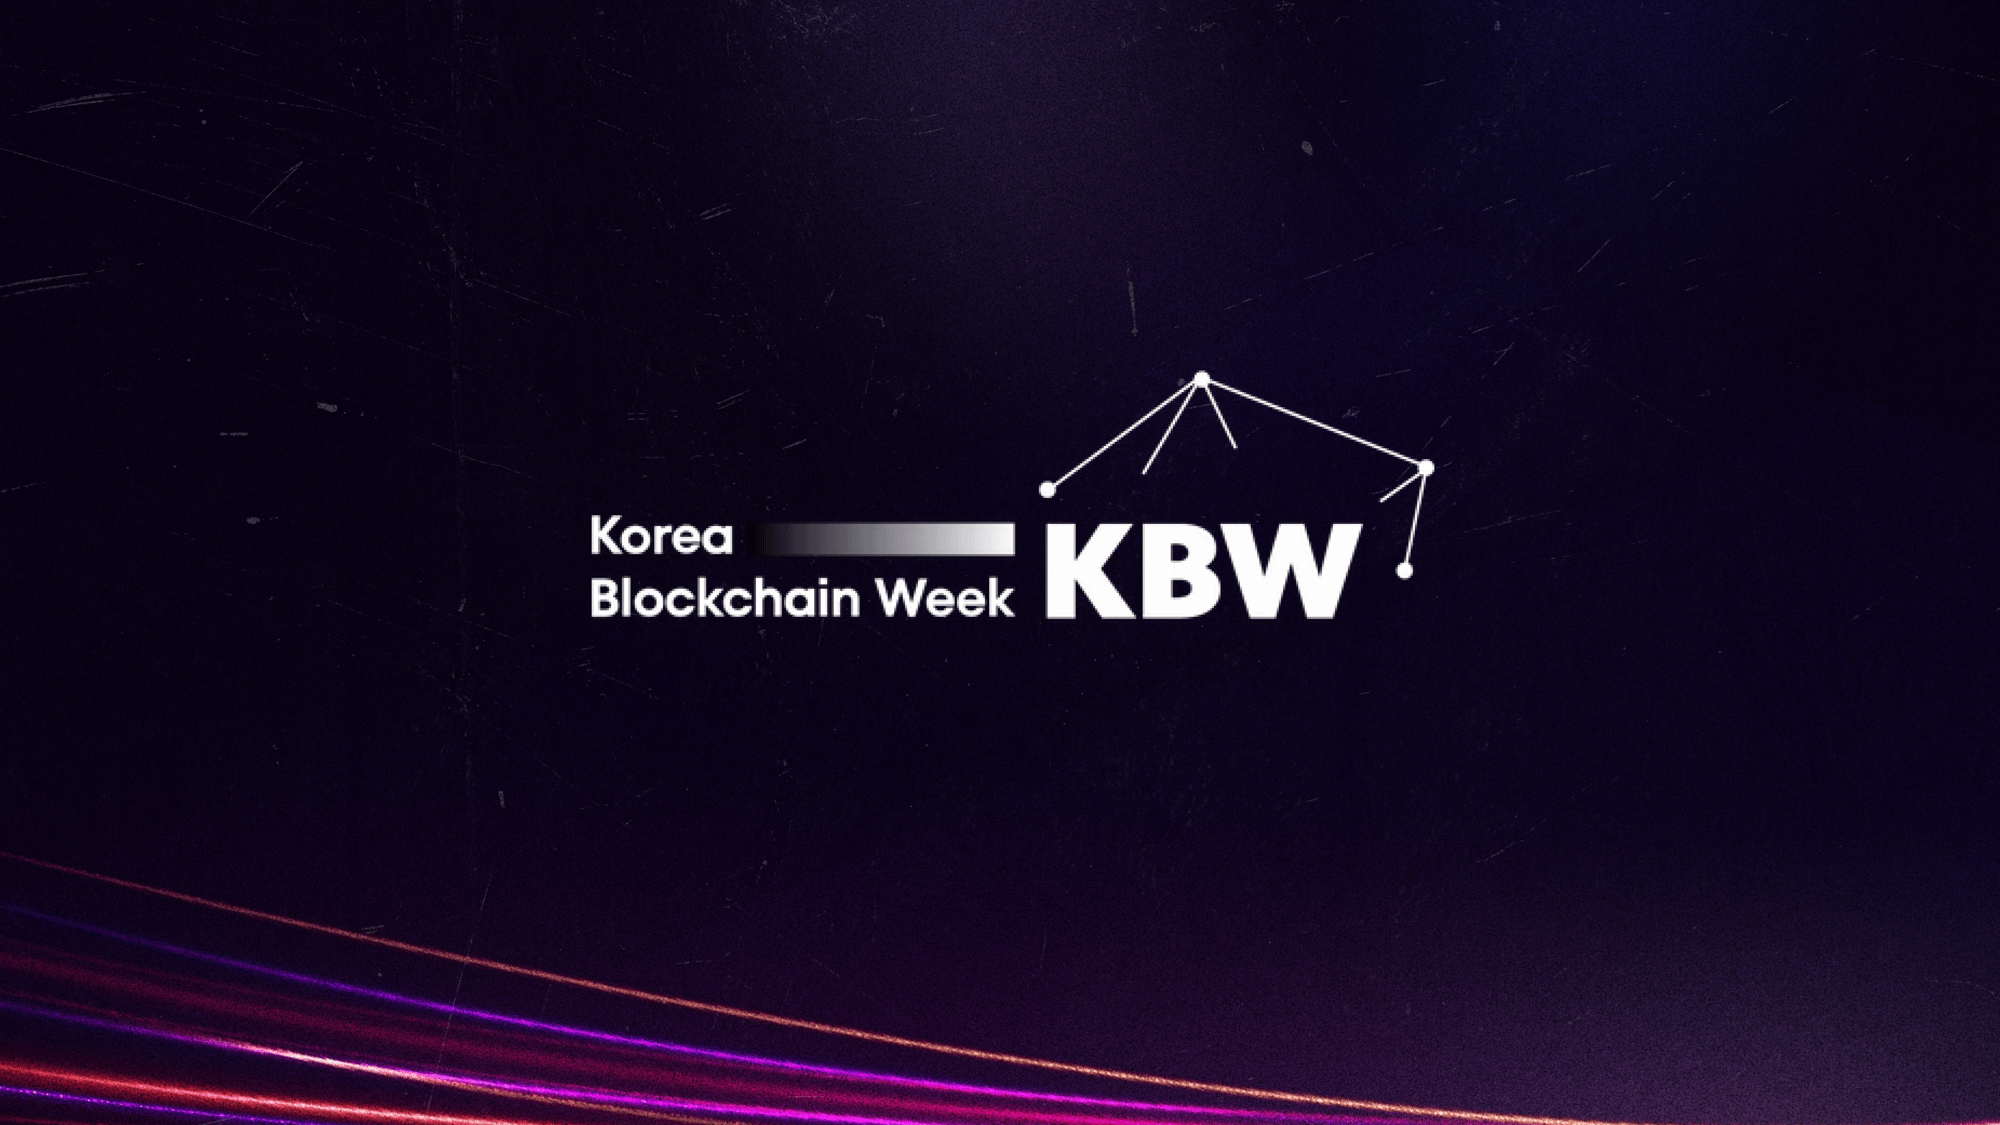 Korea blockchain week event card